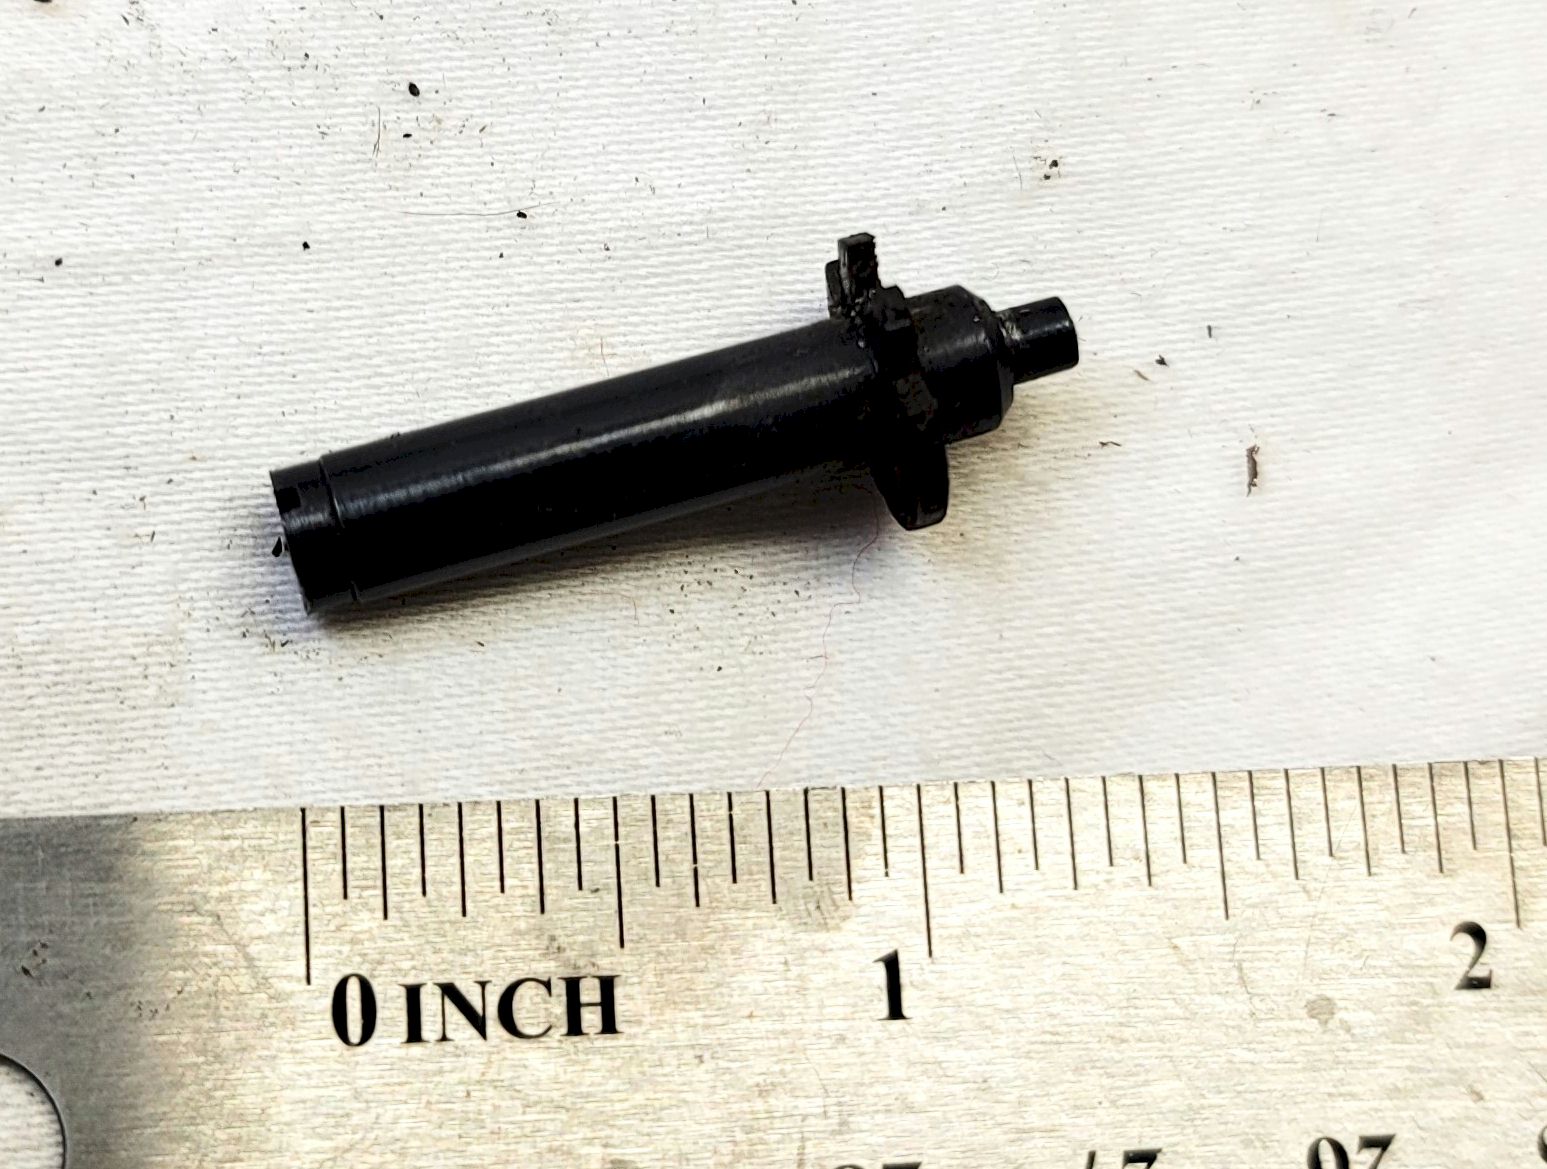 Ejector SPRING Remington Model 12 LATE ORIGINAL